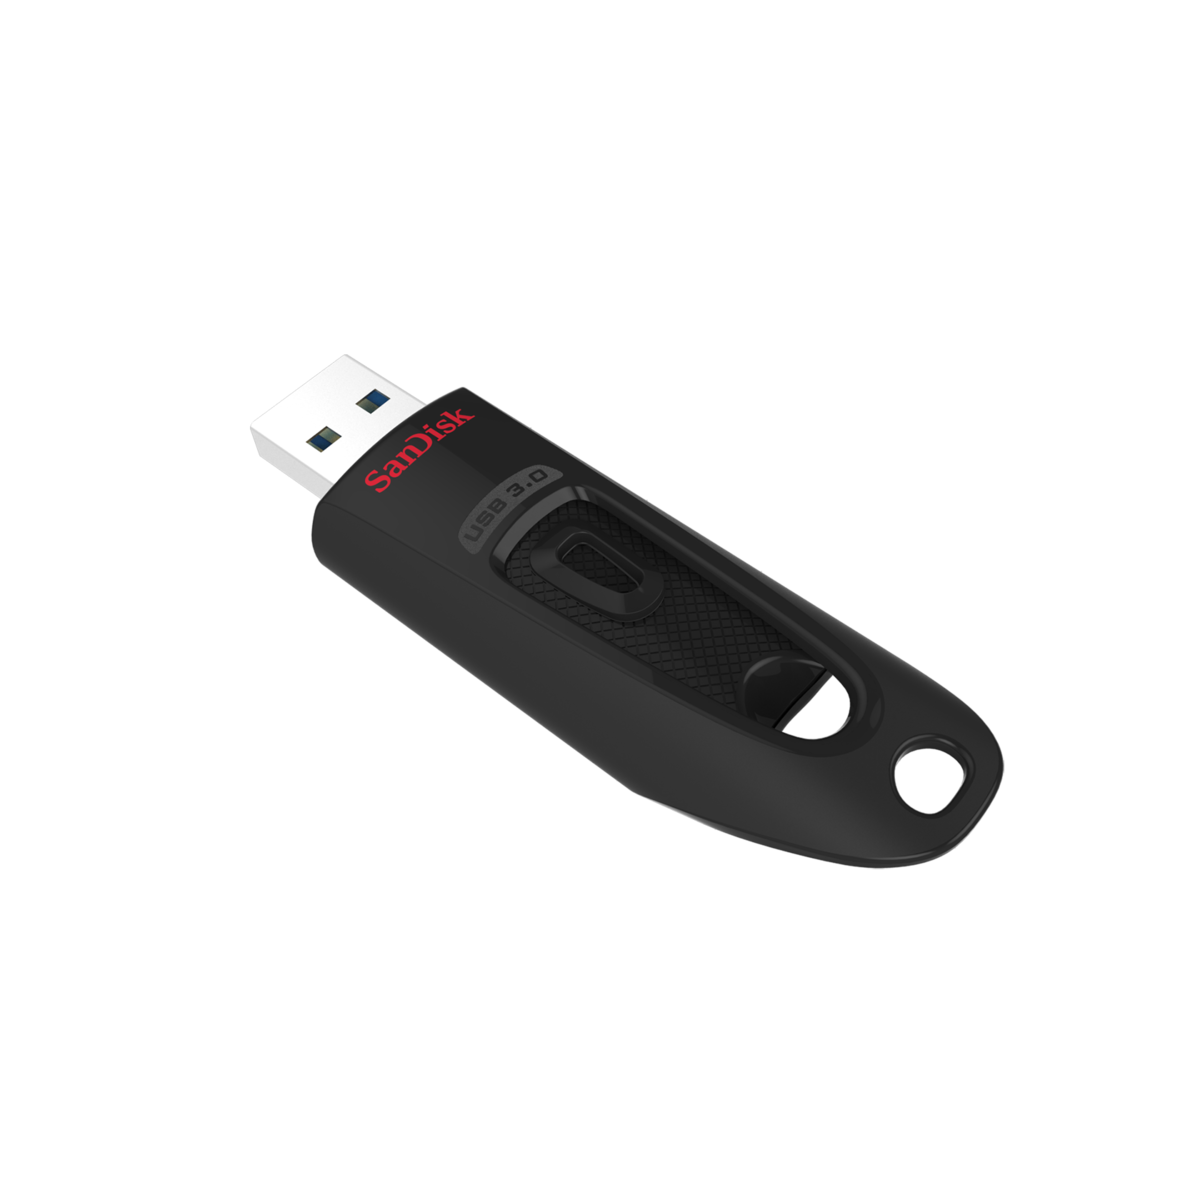 Korea voor Mechanica SanDisk Ultra - USB flash drive - 64 GB - USB 3.0 - sleek black | Dell USA